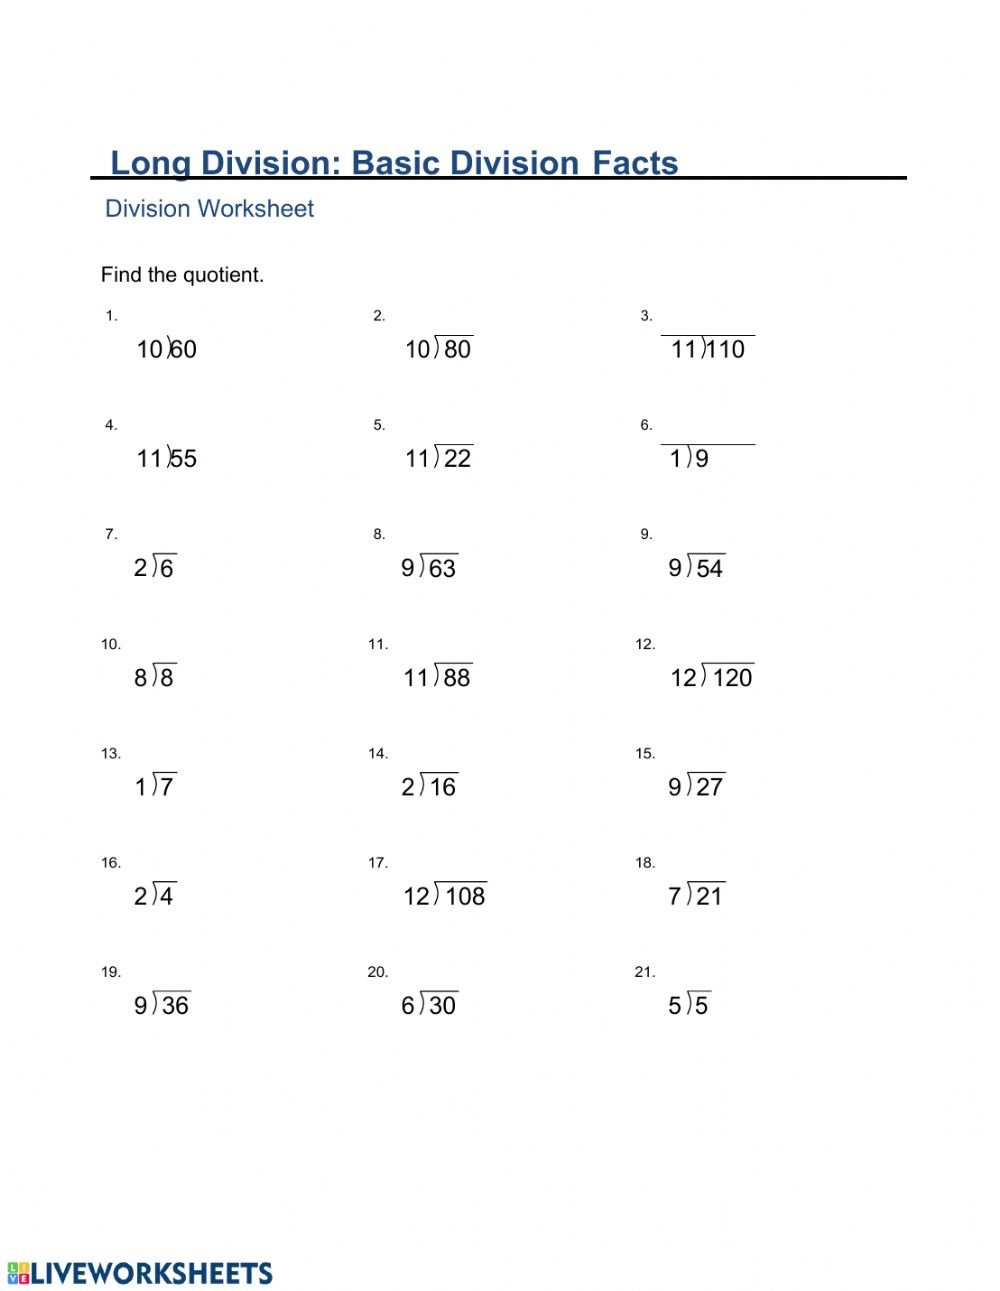 Long Division Facts Worksheet